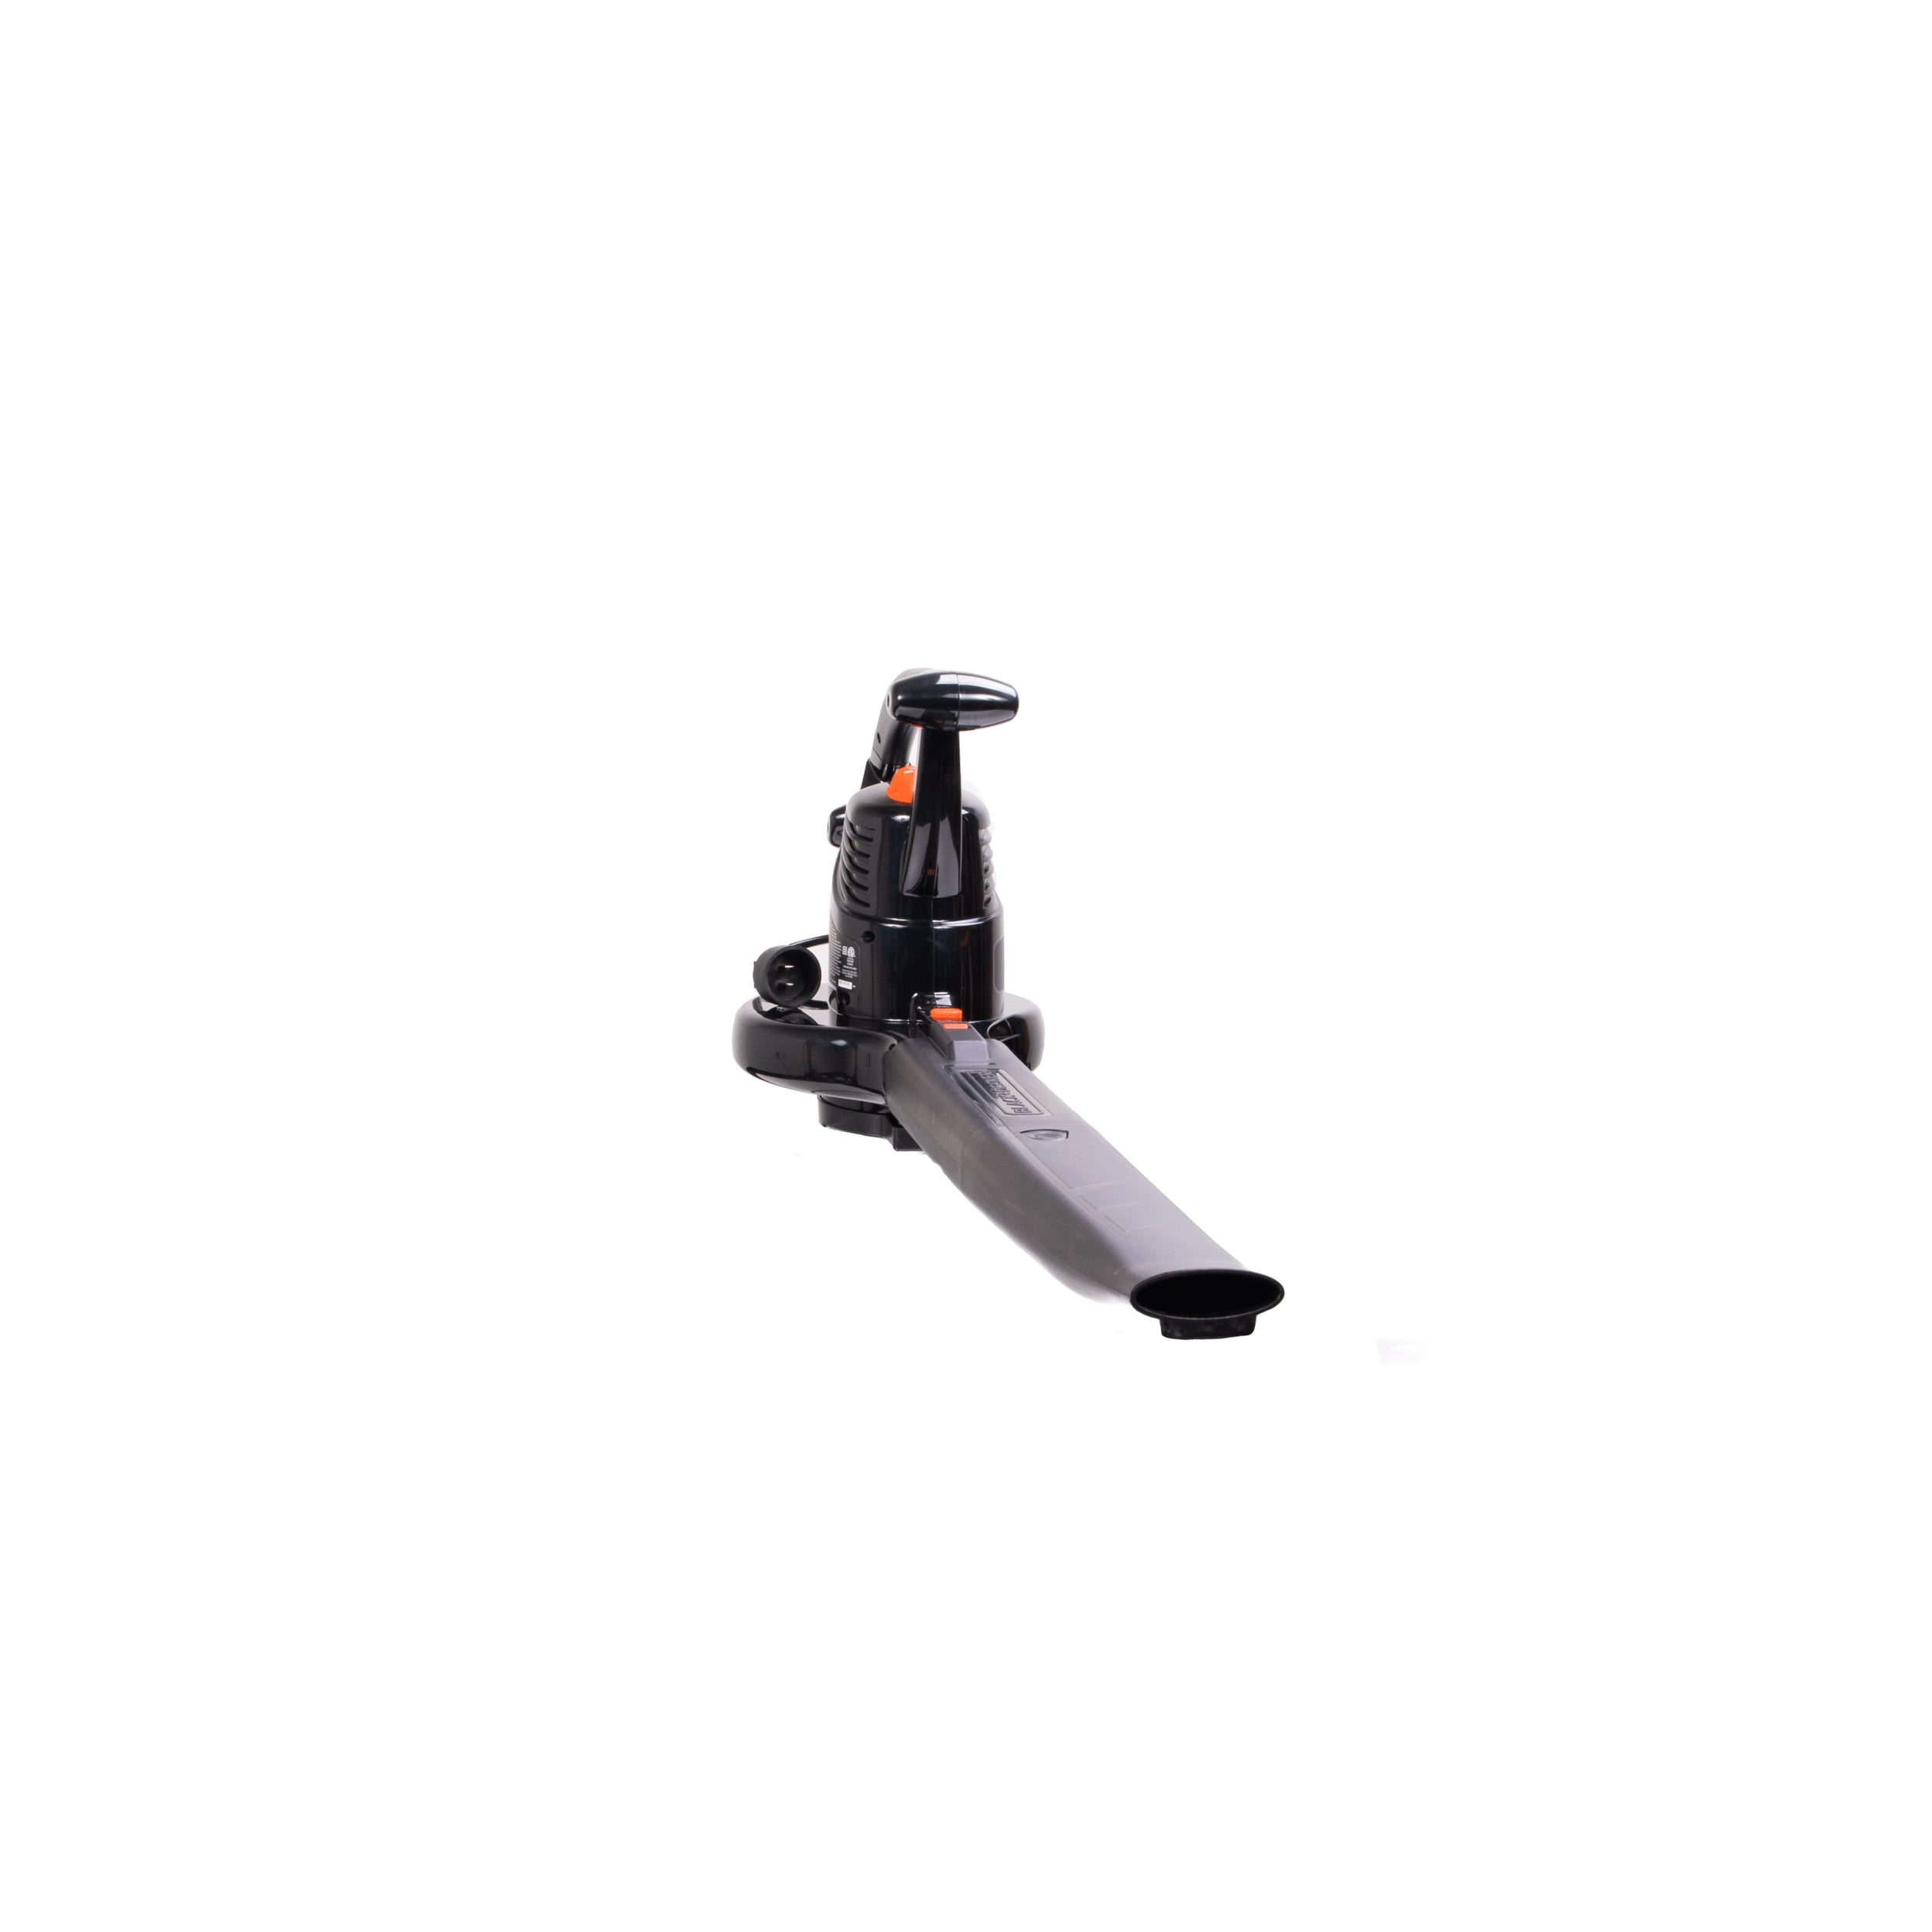 BLACK+DECKER BV3100 12Amp Blower/Vacuum/Mulcher for Sale